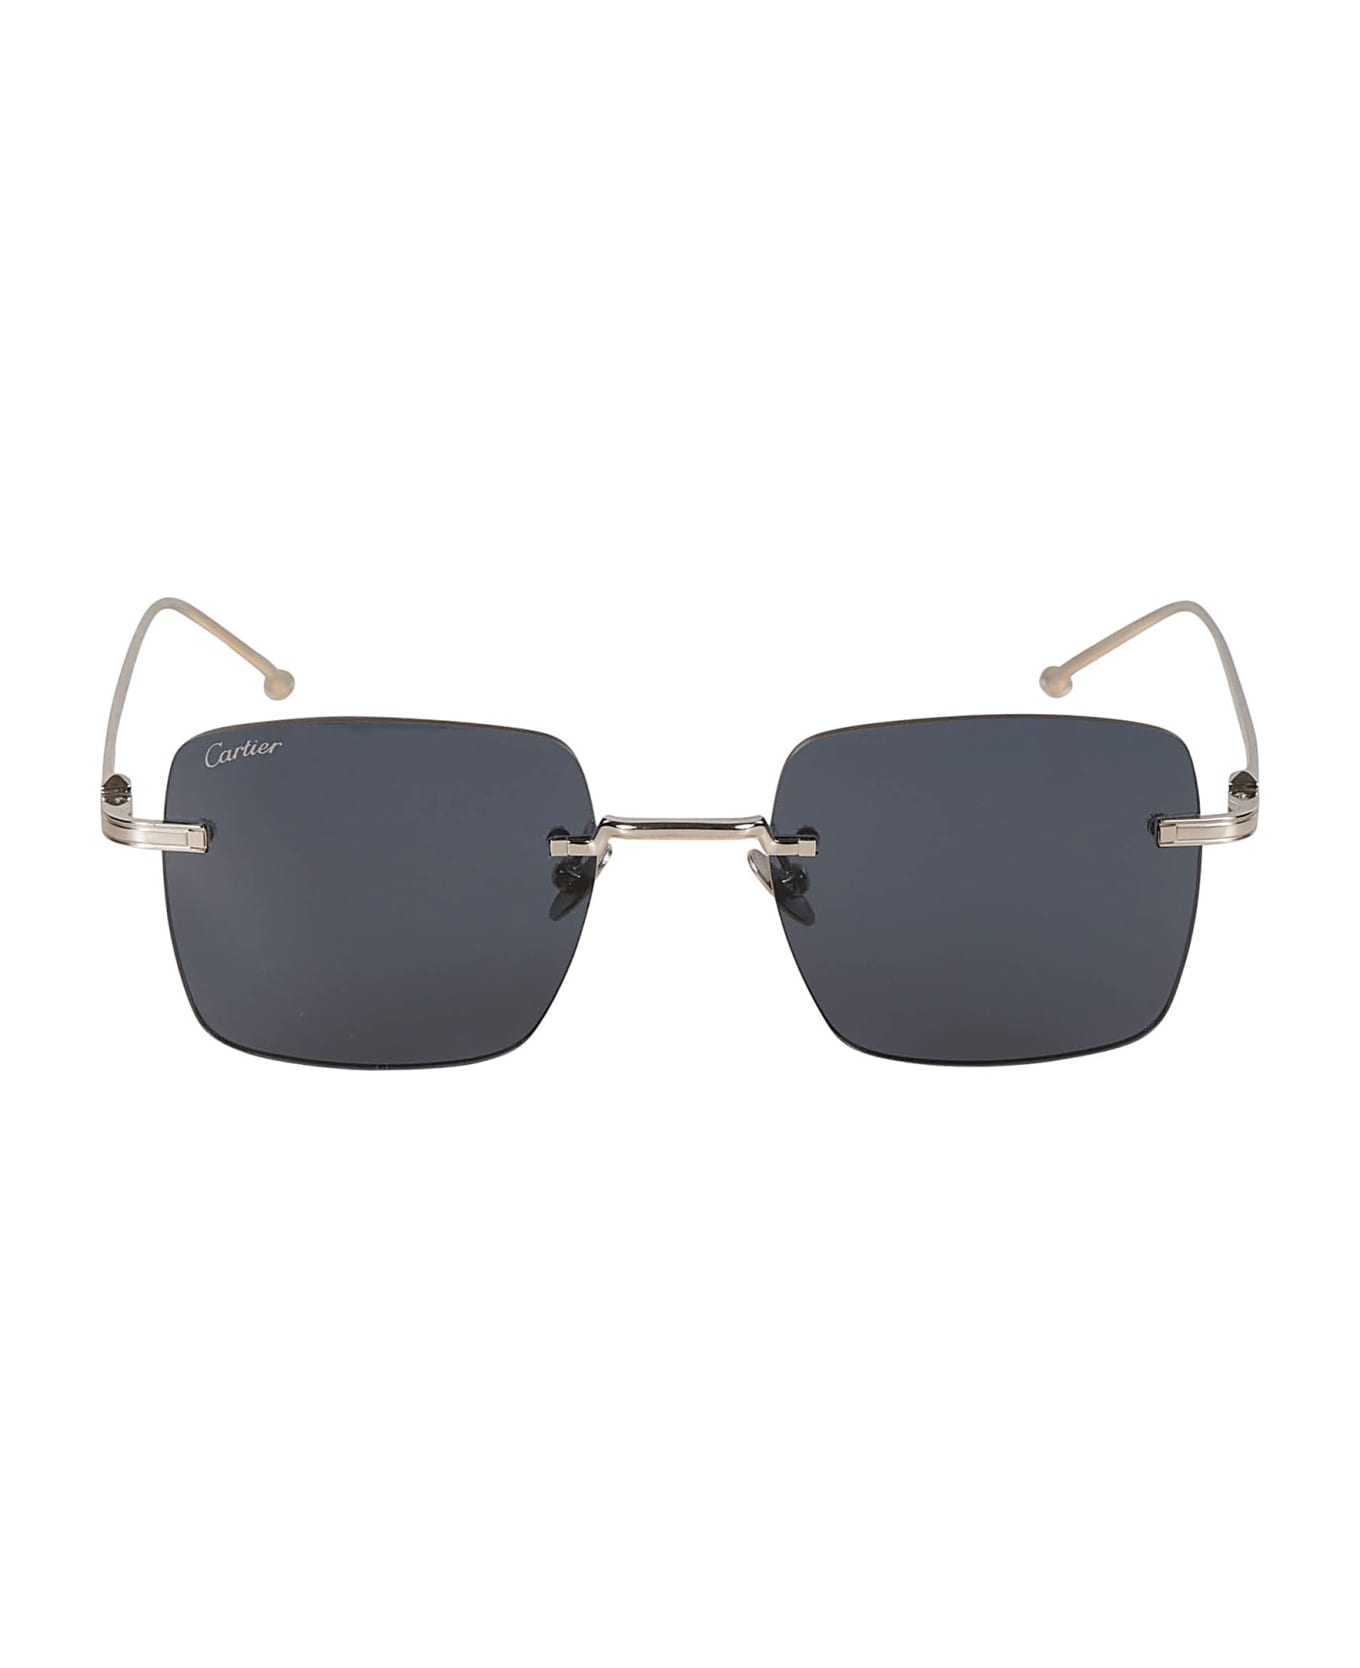 Cartier Eyewear Square Frame Glasses - Silver/Black アイウェア